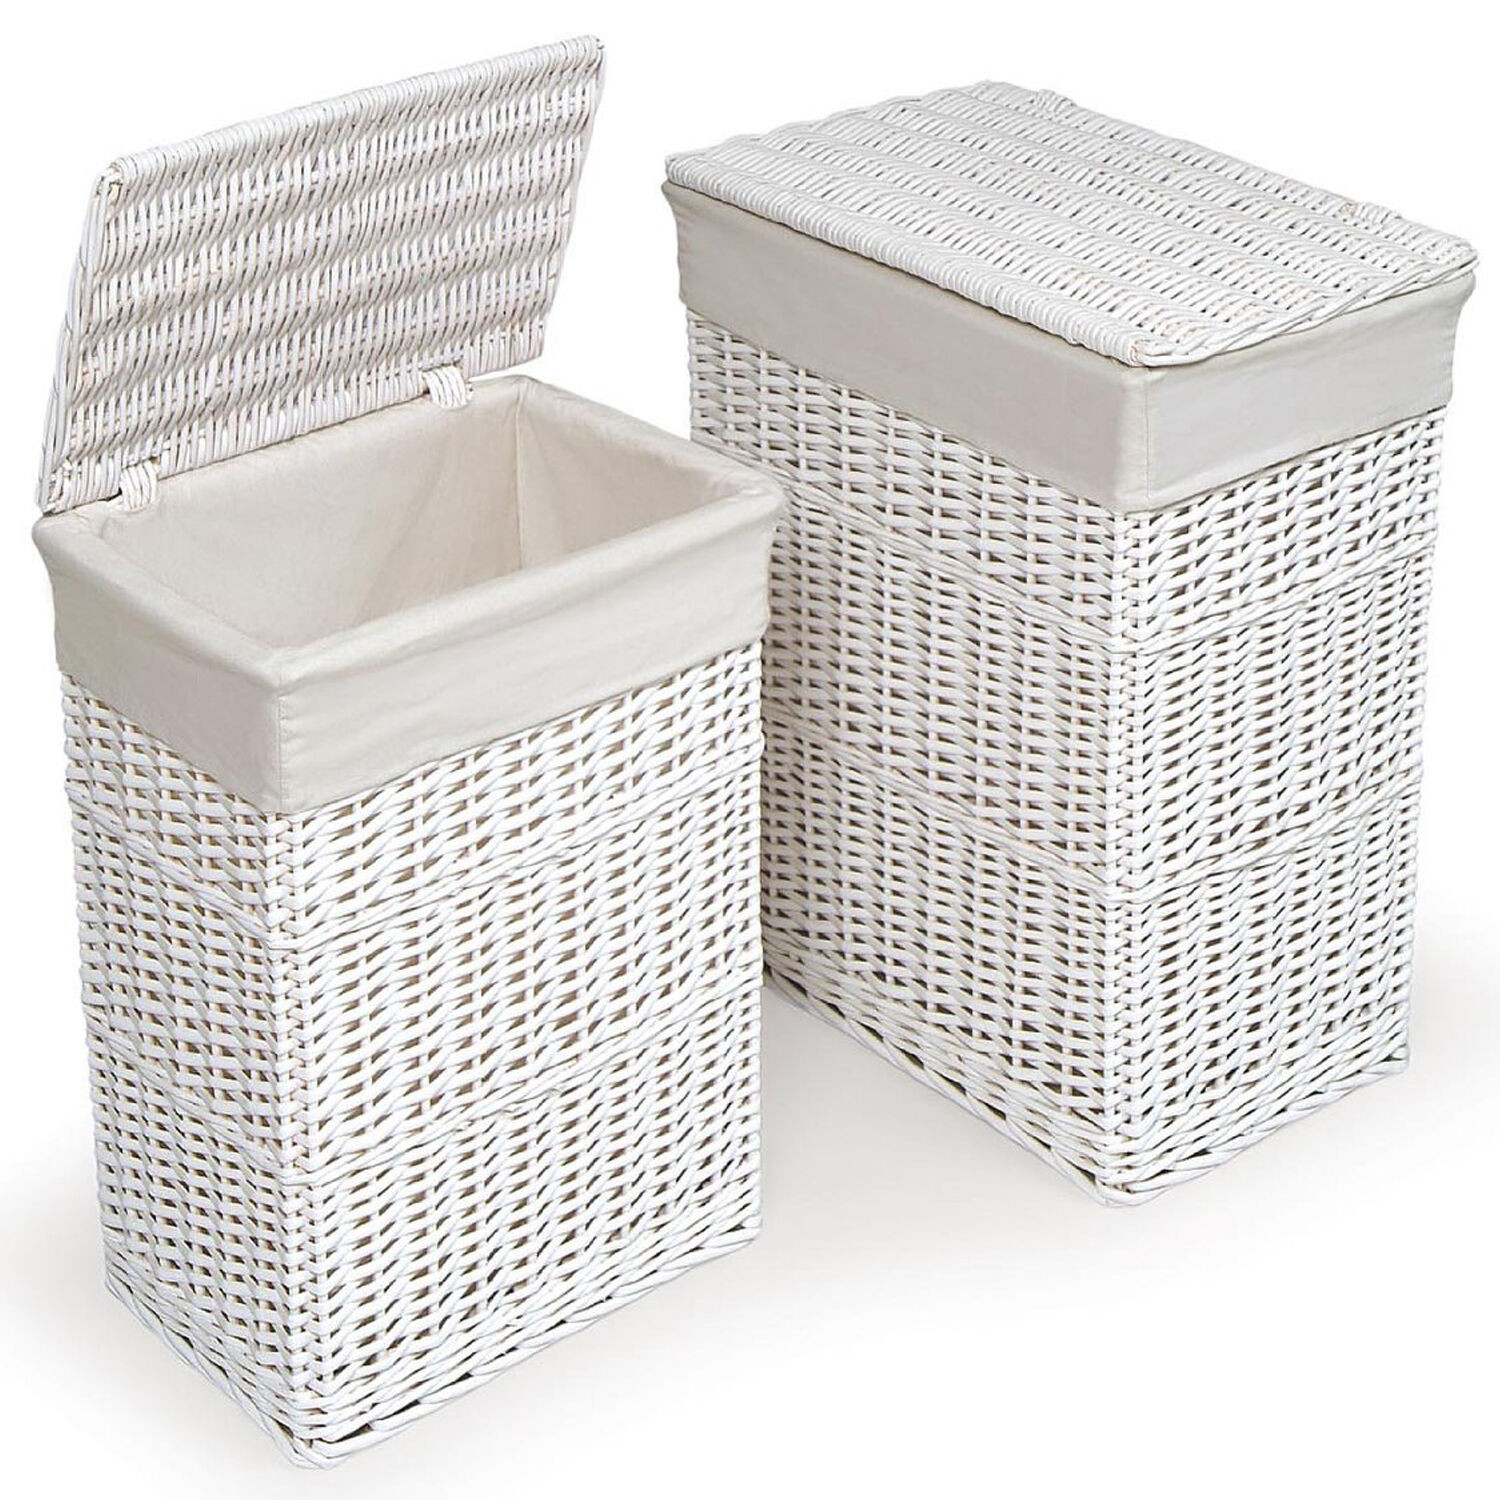 Best ideas about Laundry Basket Storage
. Save or Pin Medium Rectangular White Wicker Laundry Basket w Now.